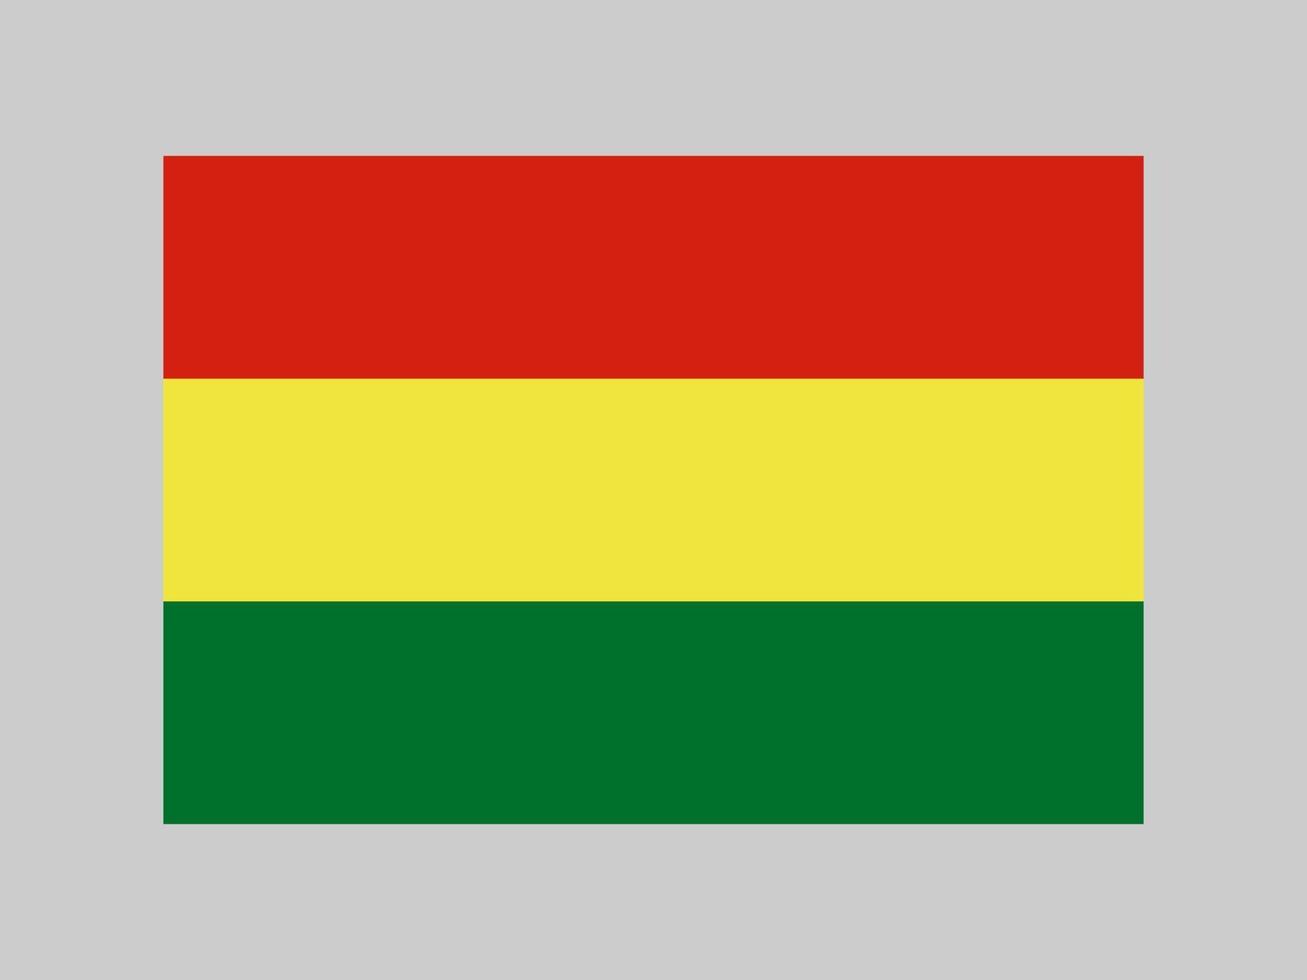 Bolivien-Flagge, offizielle Farben und Proportionen. Vektor-Illustration. vektor